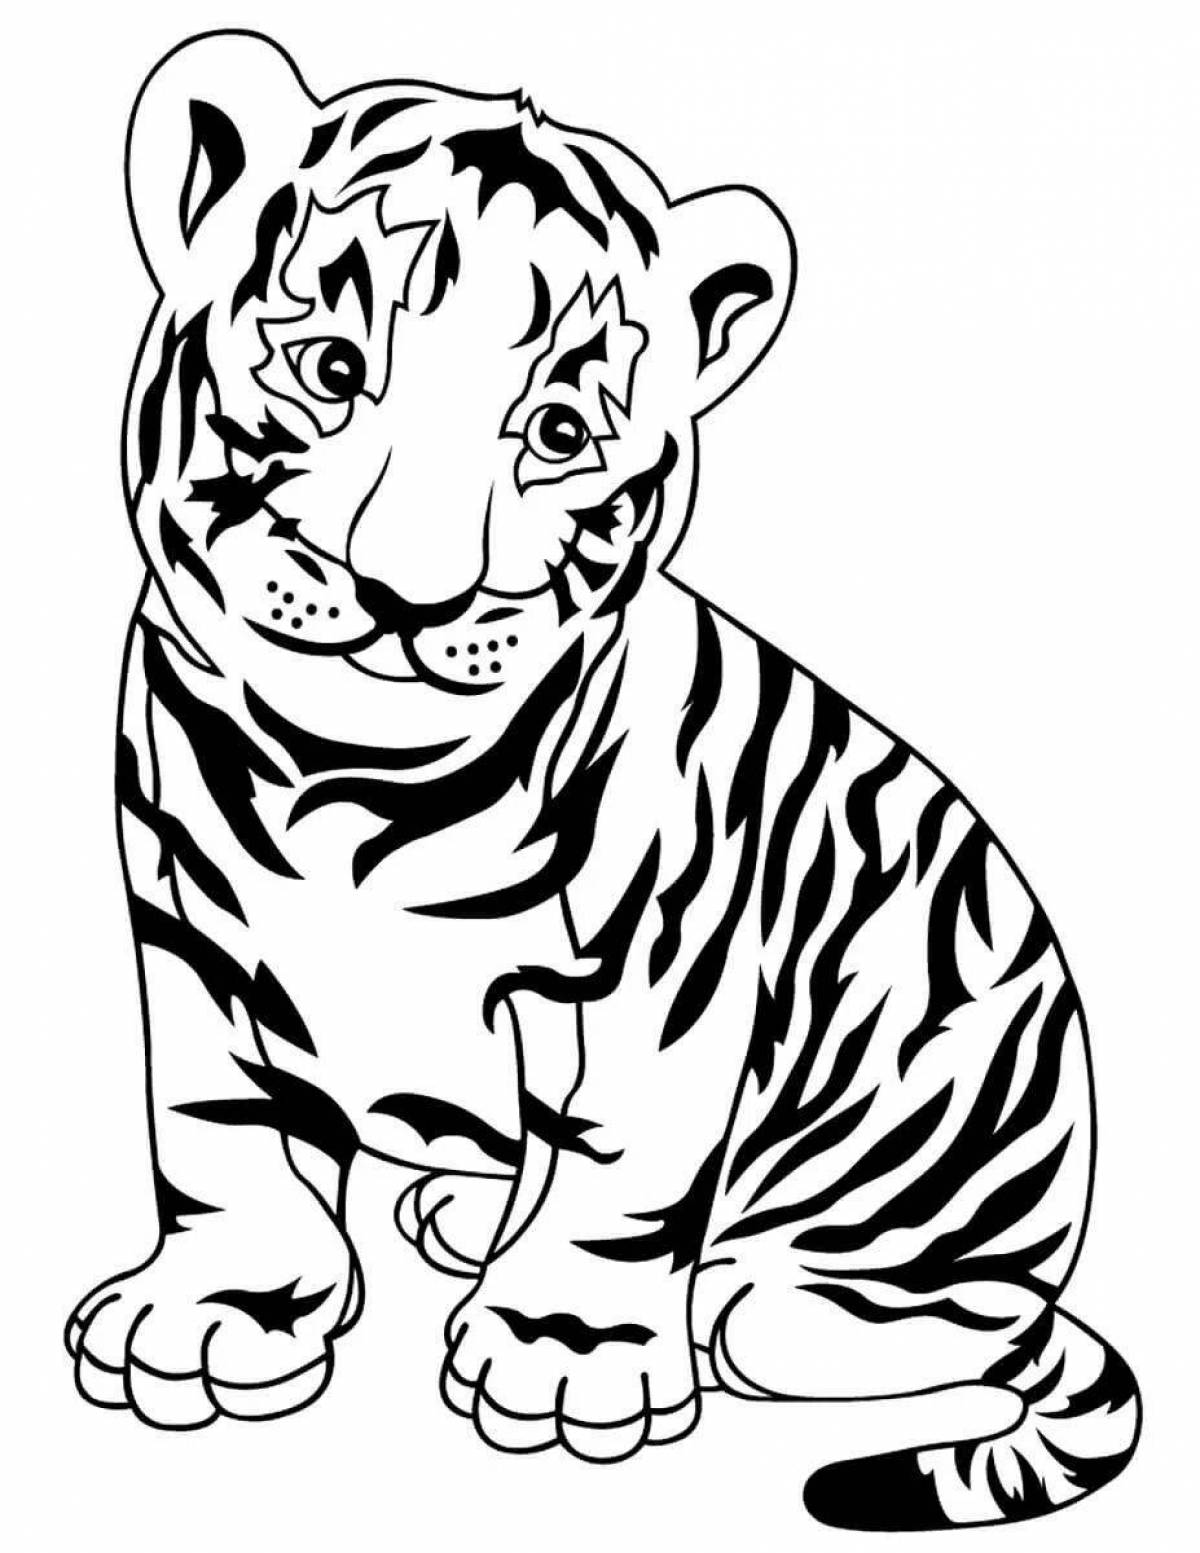 Coloring book shining tiger cub